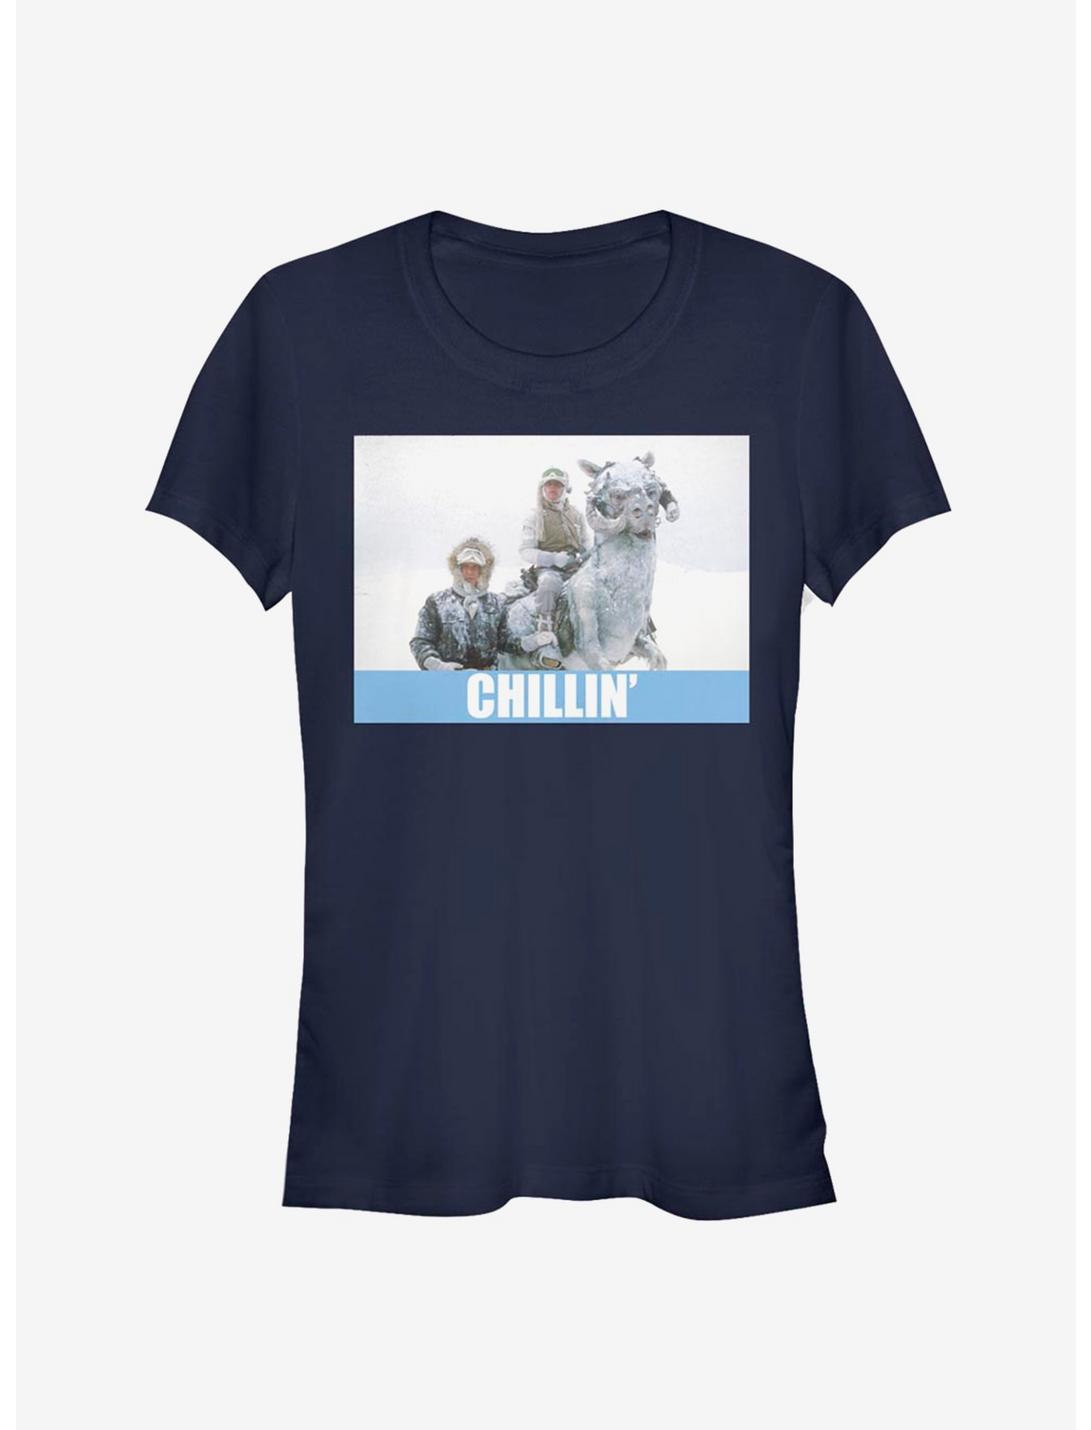 Star Wars Chillin' Girls T-Shirt, NAVY, hi-res